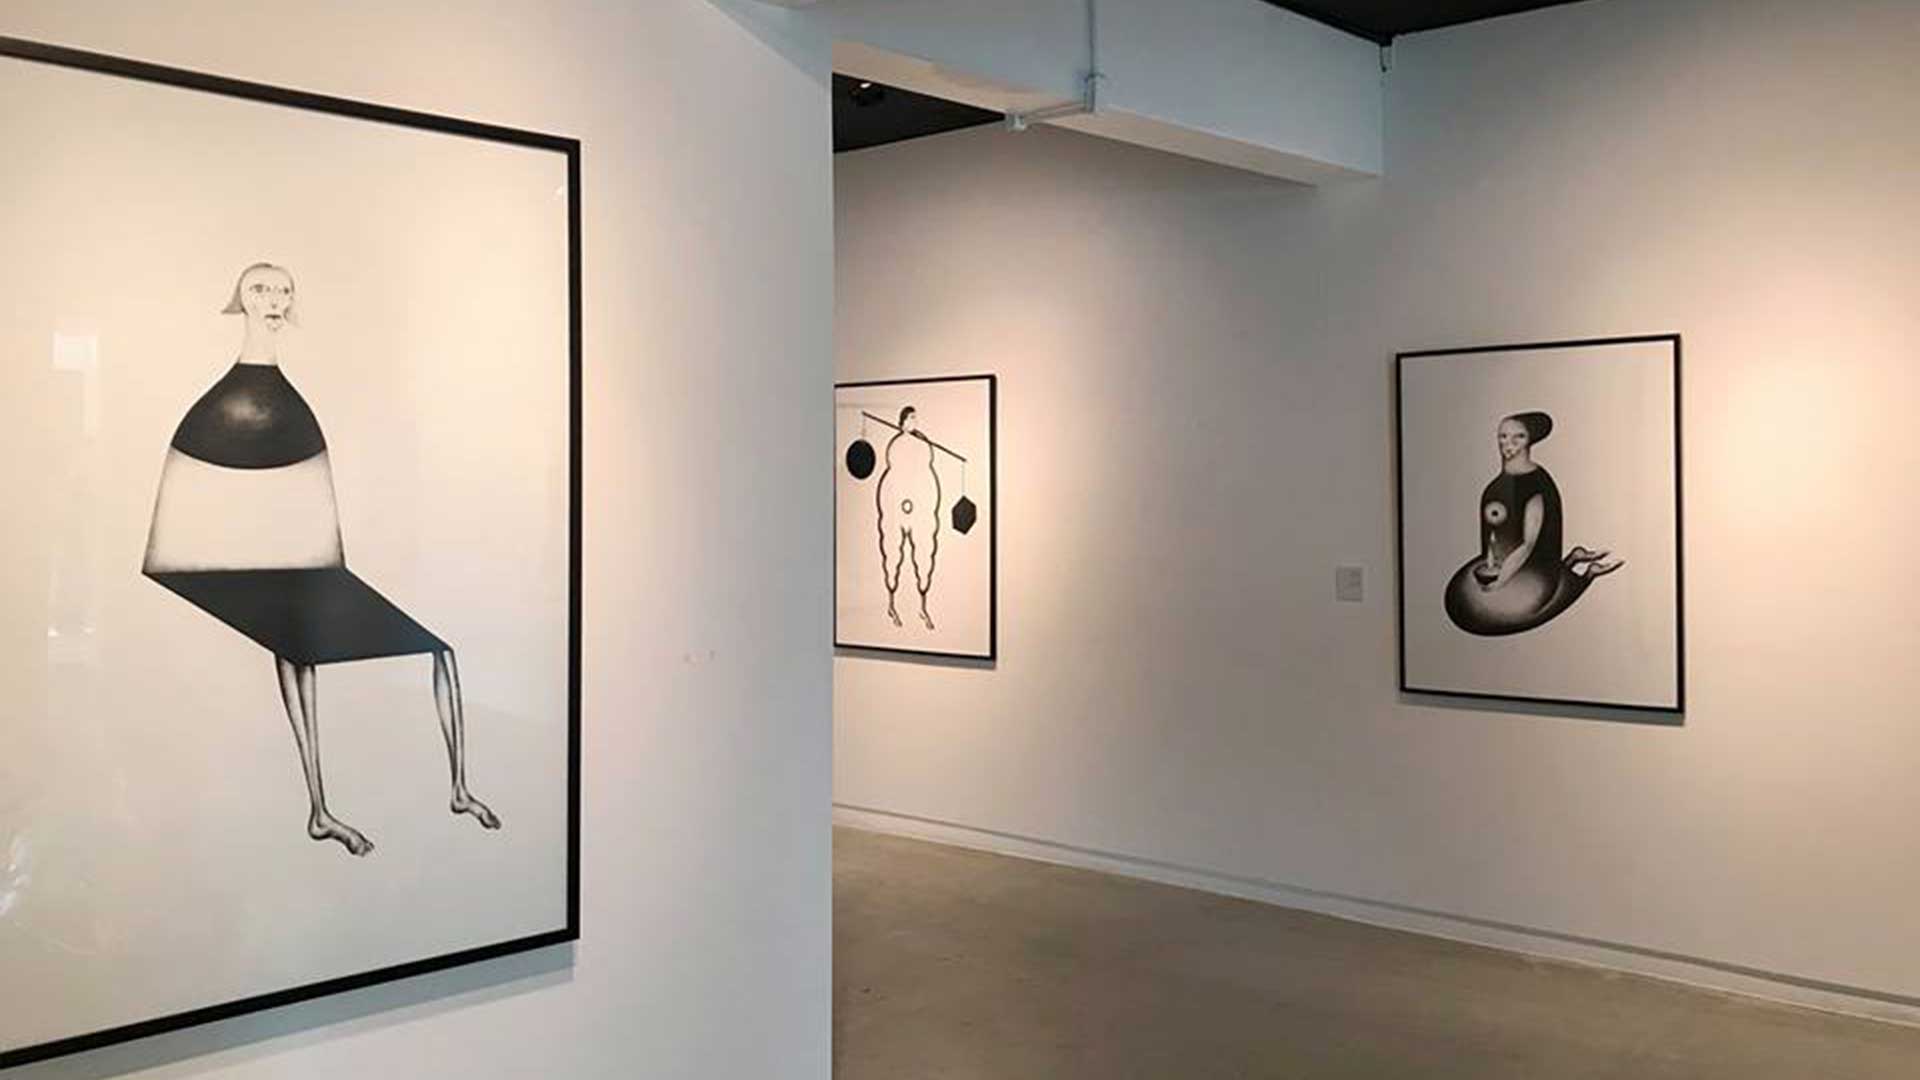 Exhibition Pieces from Berlin By Bussaraporn Thongchai | ที่ระลึกจากเบอร์ลิน โดย บุษราพร ทองชัย